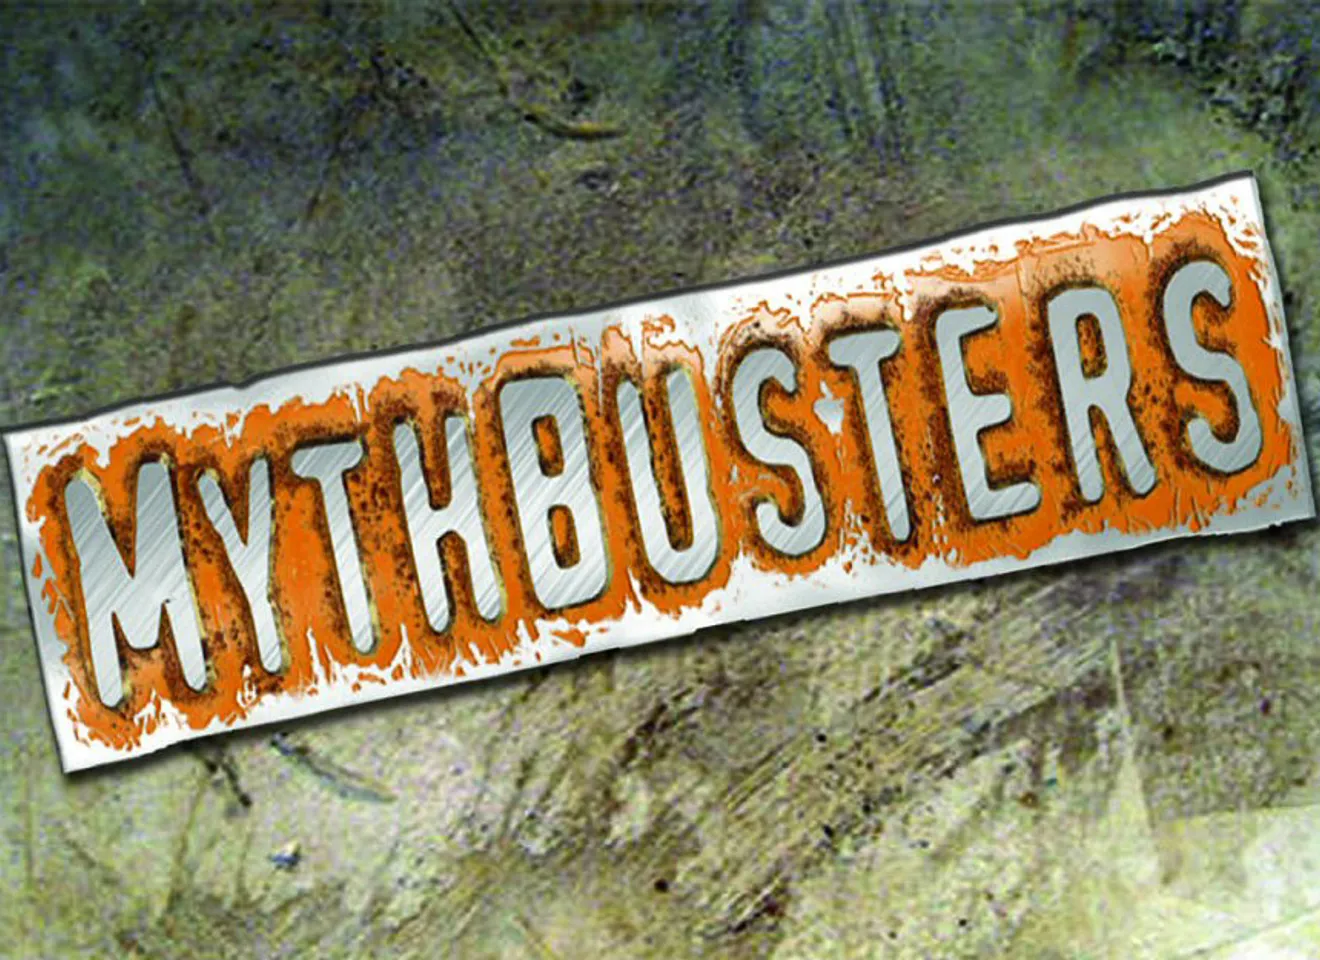 Mythbuster-